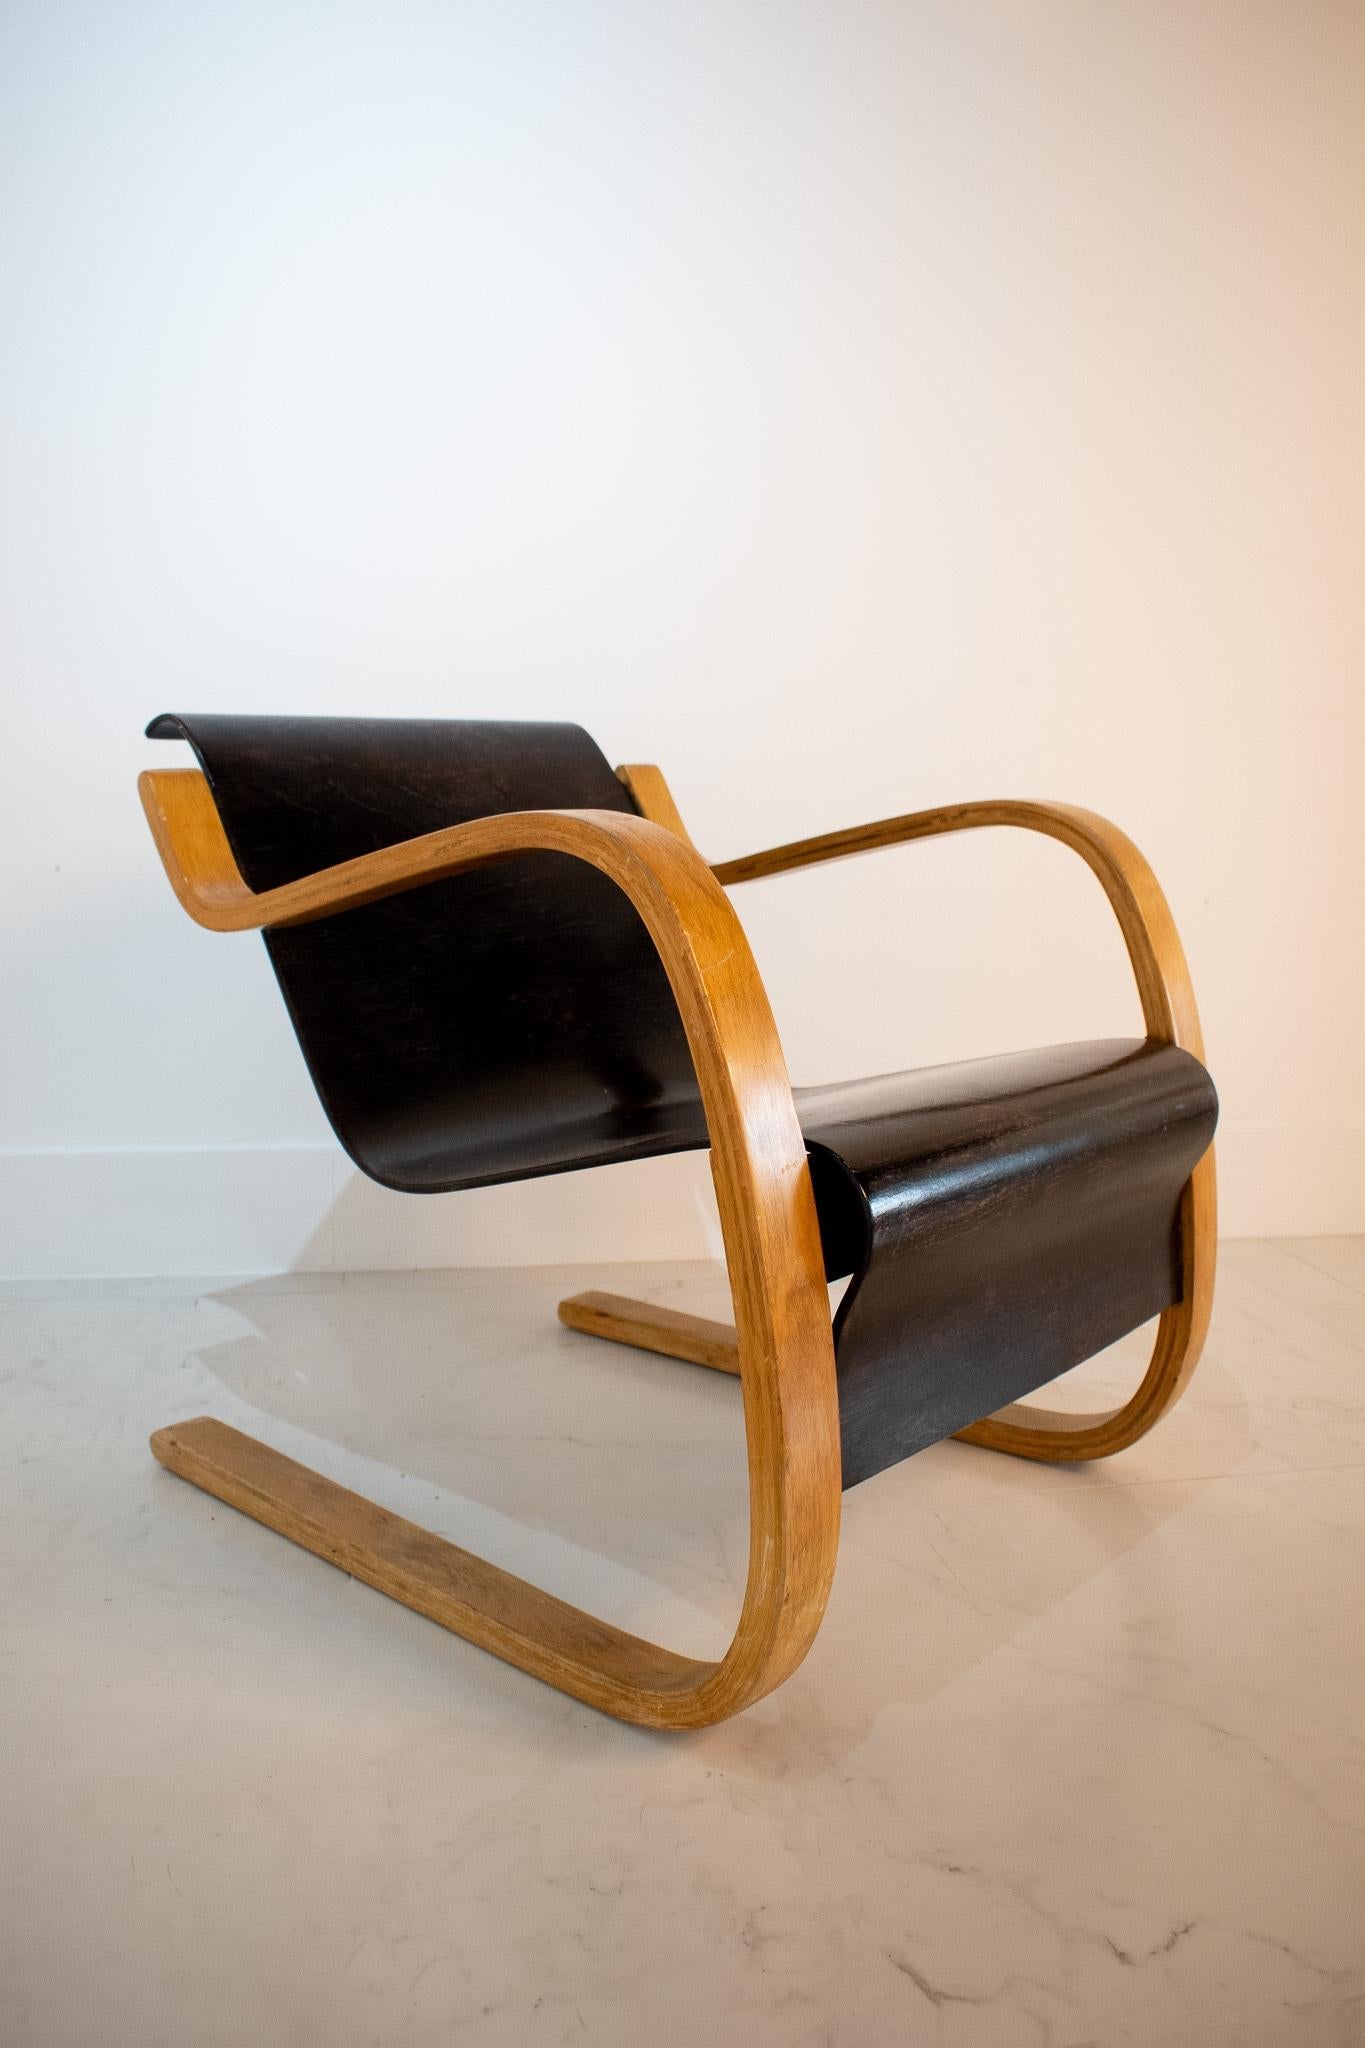 Finnish Alvar Aalto 31 Lounge Chair for the Paimio Sanitorium, Finland, 1931